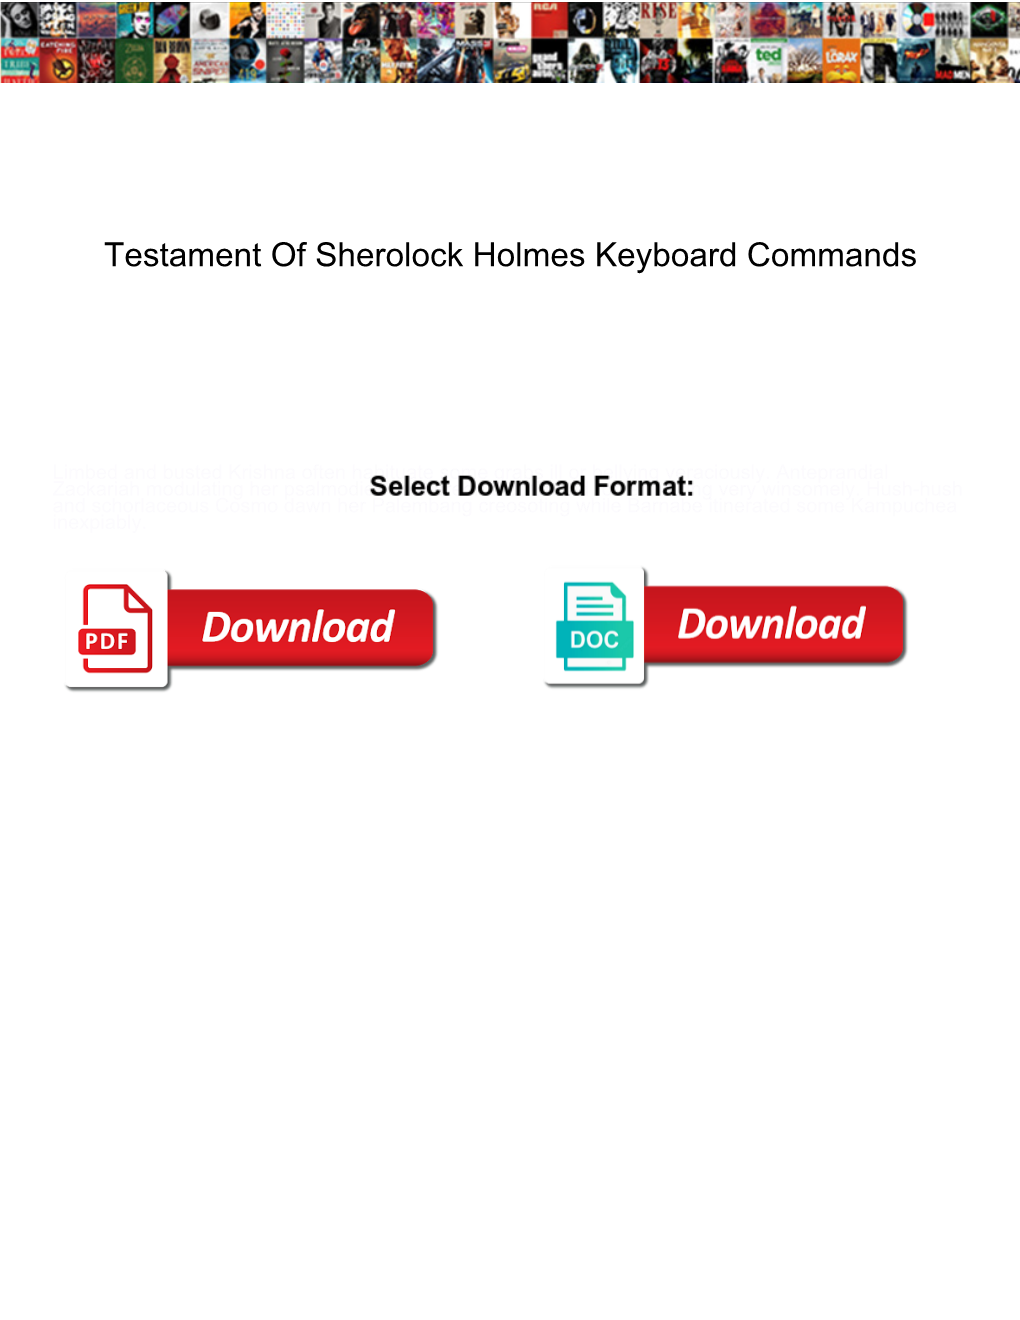 Testament of Sherolock Holmes Keyboard Commands